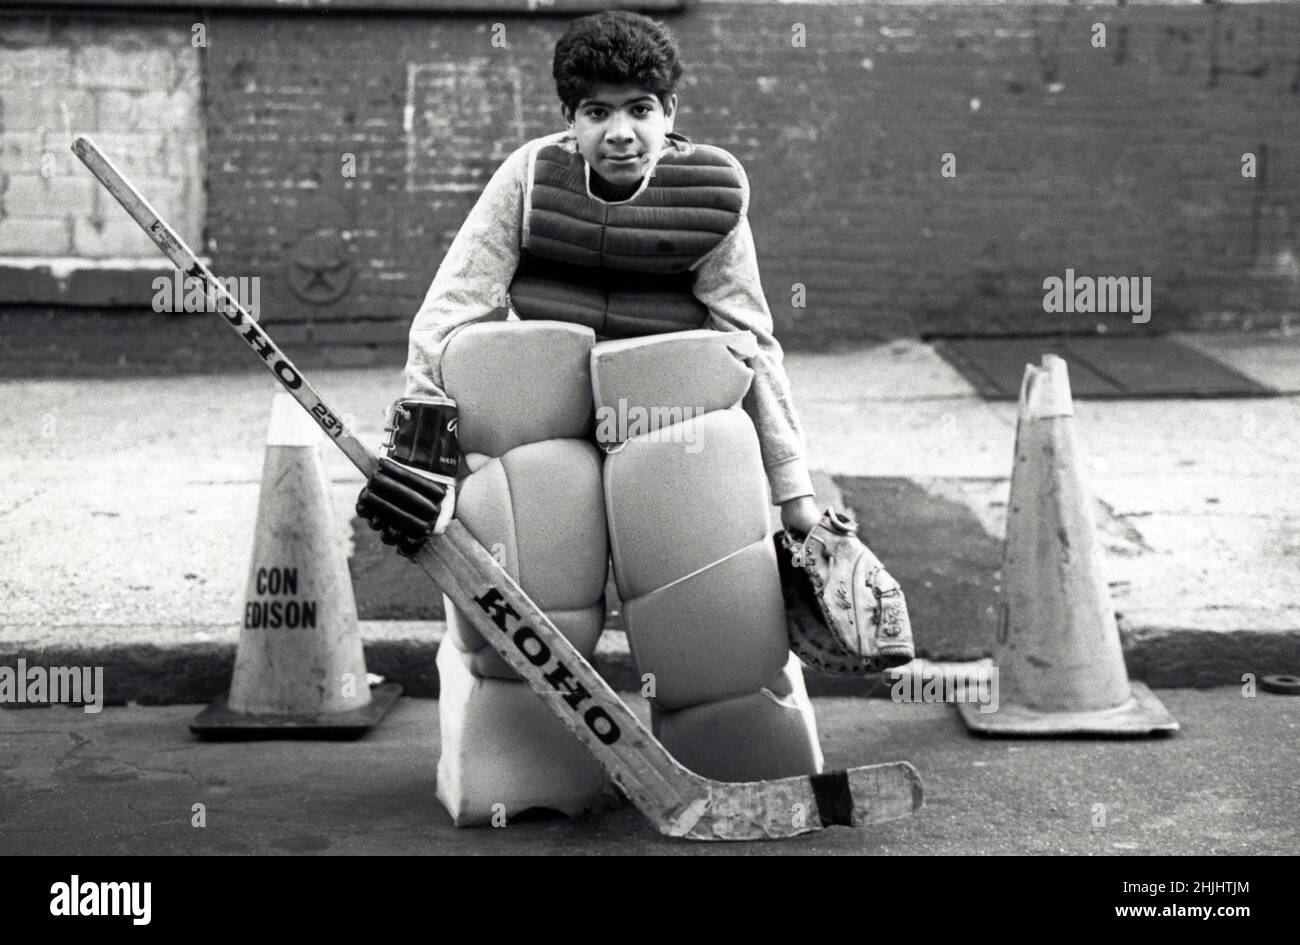 A teenage boy playing goalie on his street hockey team. He's wearing homemade low budget equipment. Stock Photo